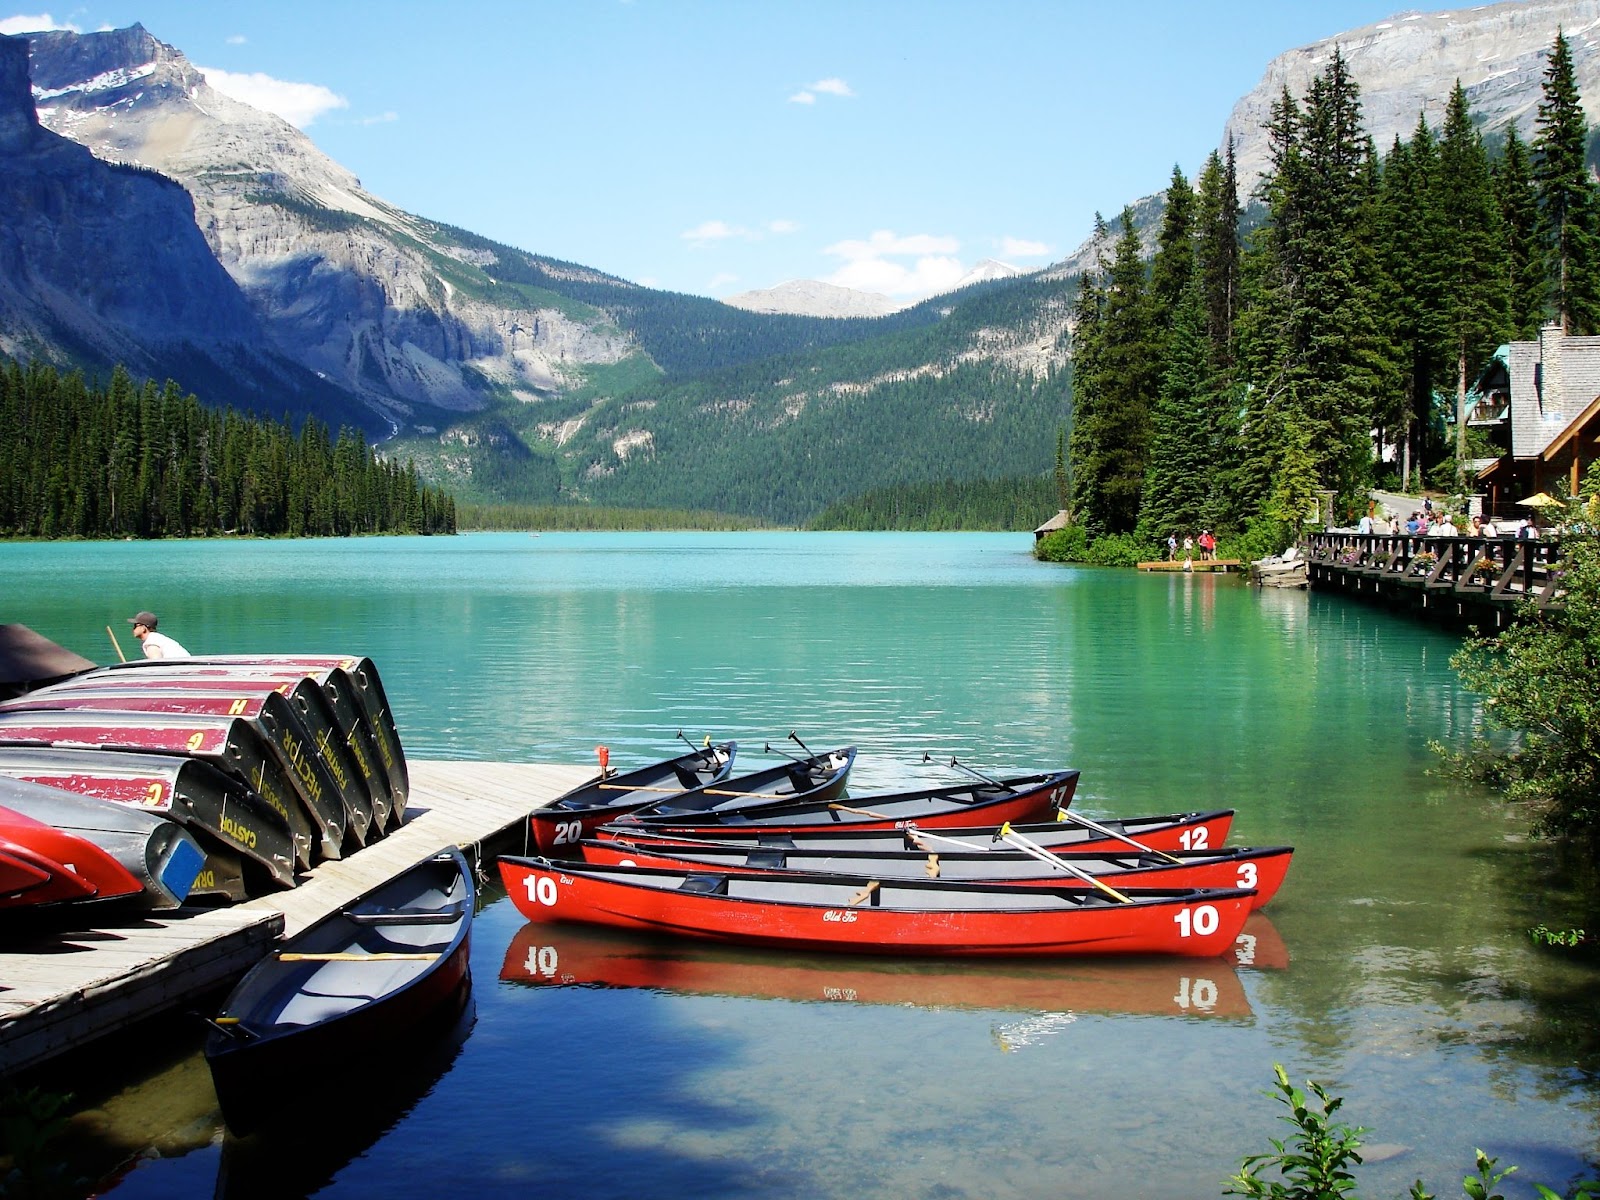 Canoeing and Kayaking at Emerald lake